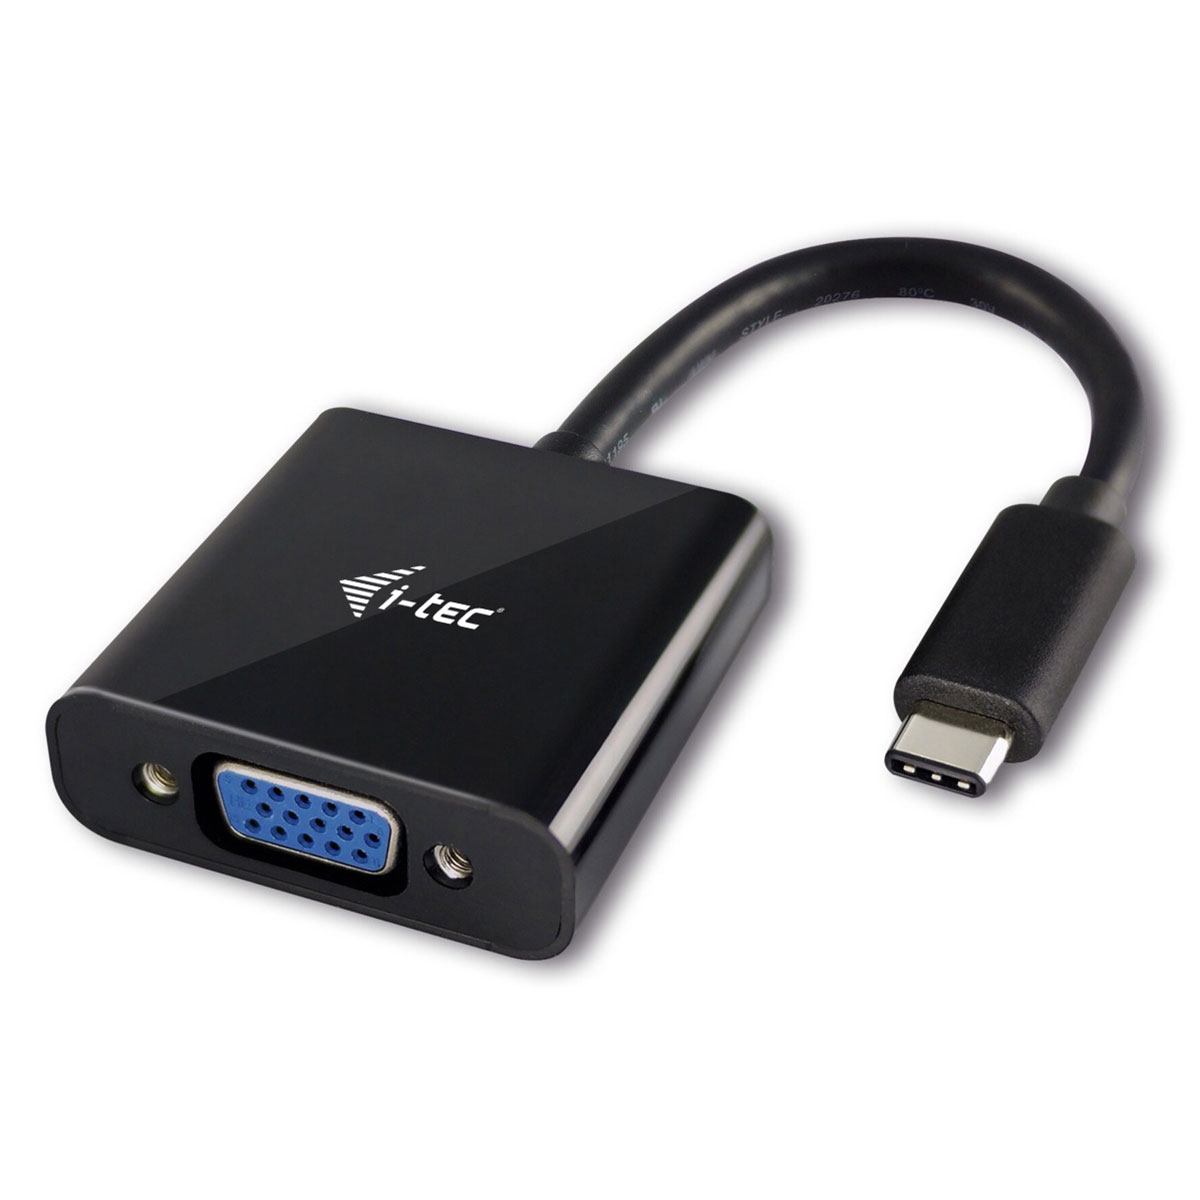 Usb c vga. Переходник d-sub - Thunderbolt 3. Переходник j5create USB-C® to HDMI™ 2.1 8k Adapter серый/чёрный (jca157). Переходник Thunderbolt USB. Переходник USB на VGA.